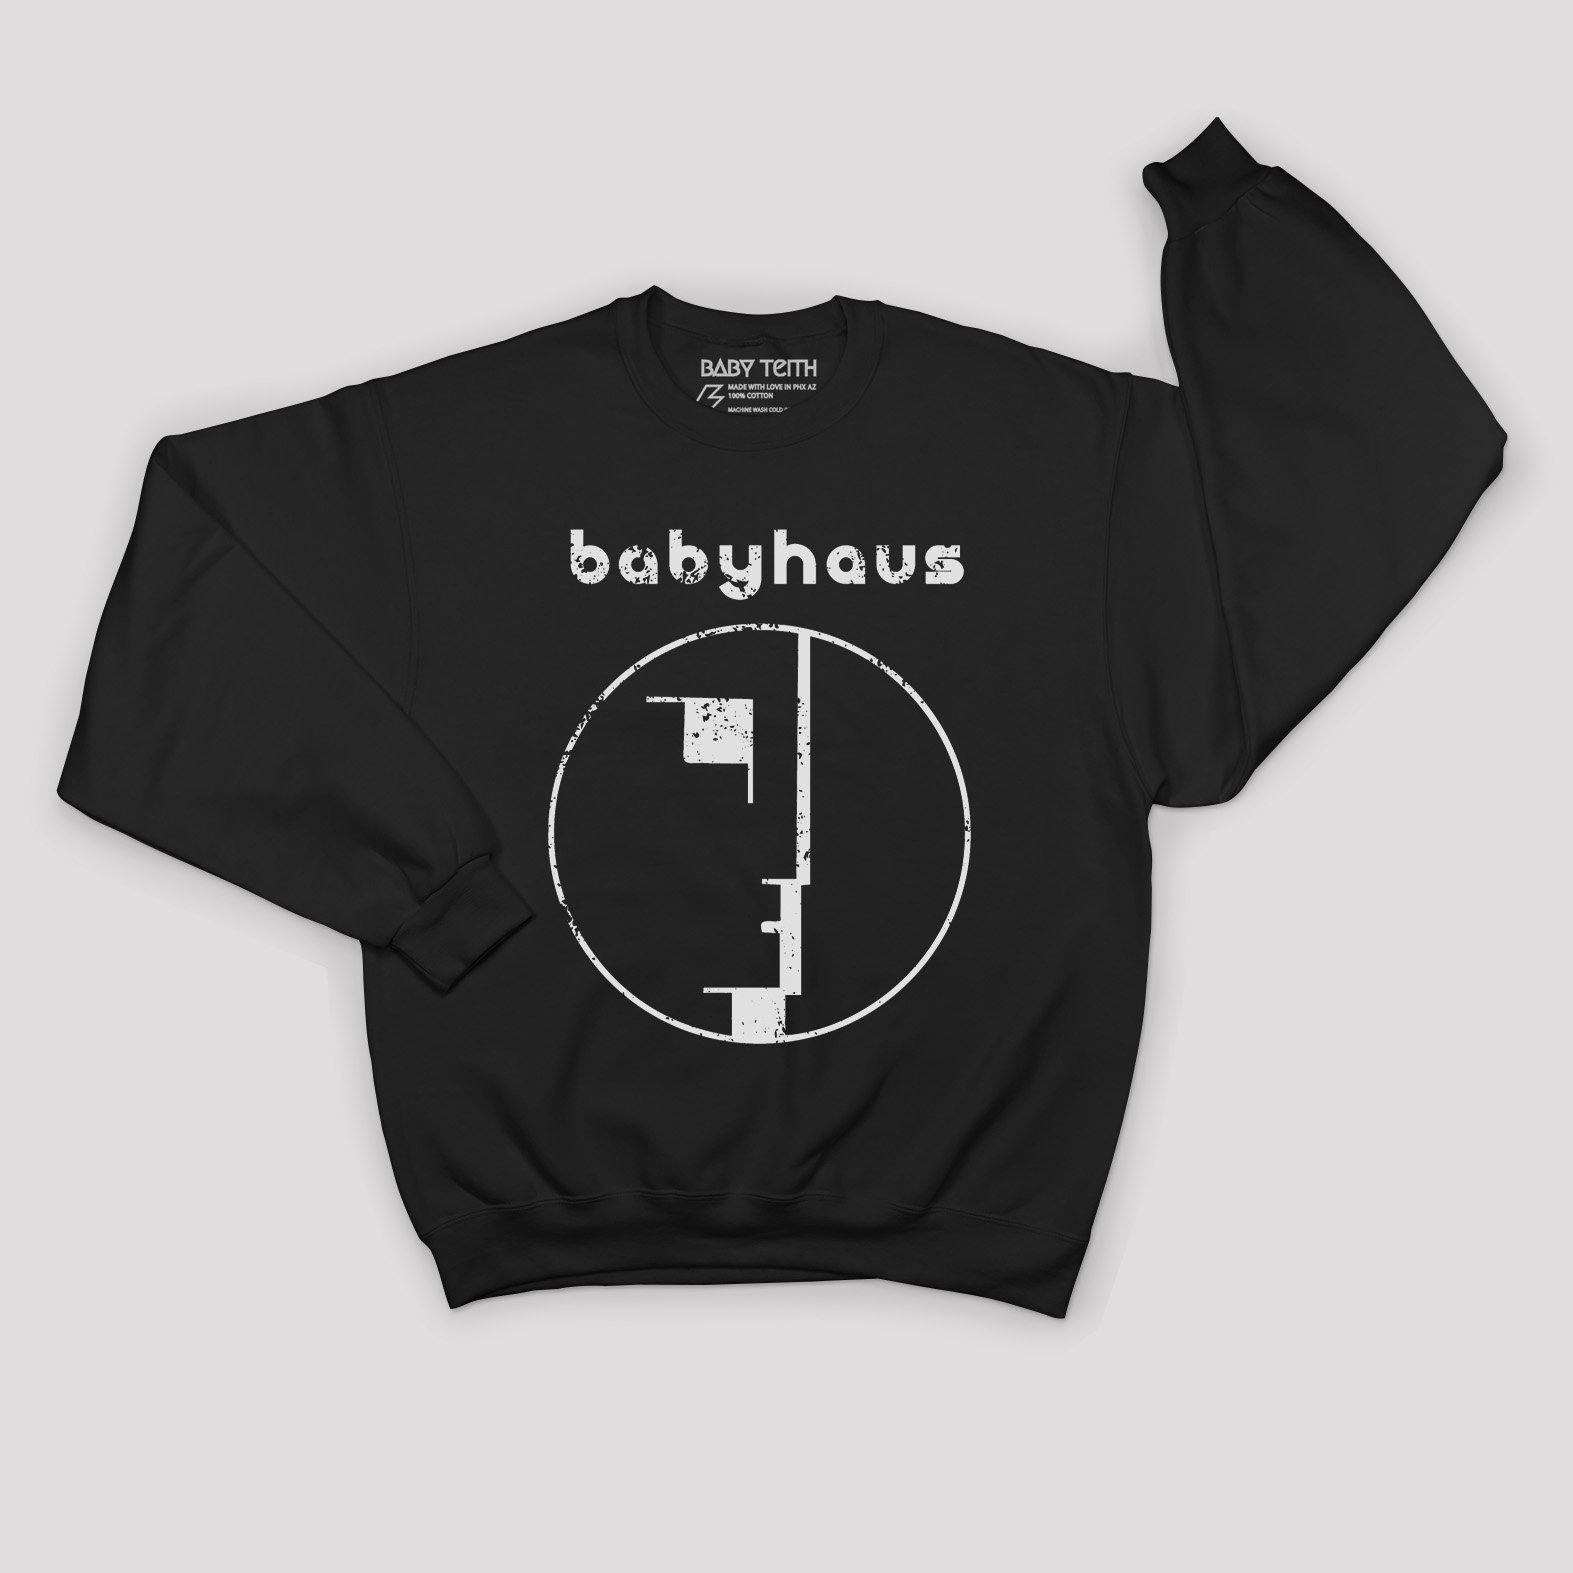 "Bauhaus" Sweatshirt for Kids - Baby Teith